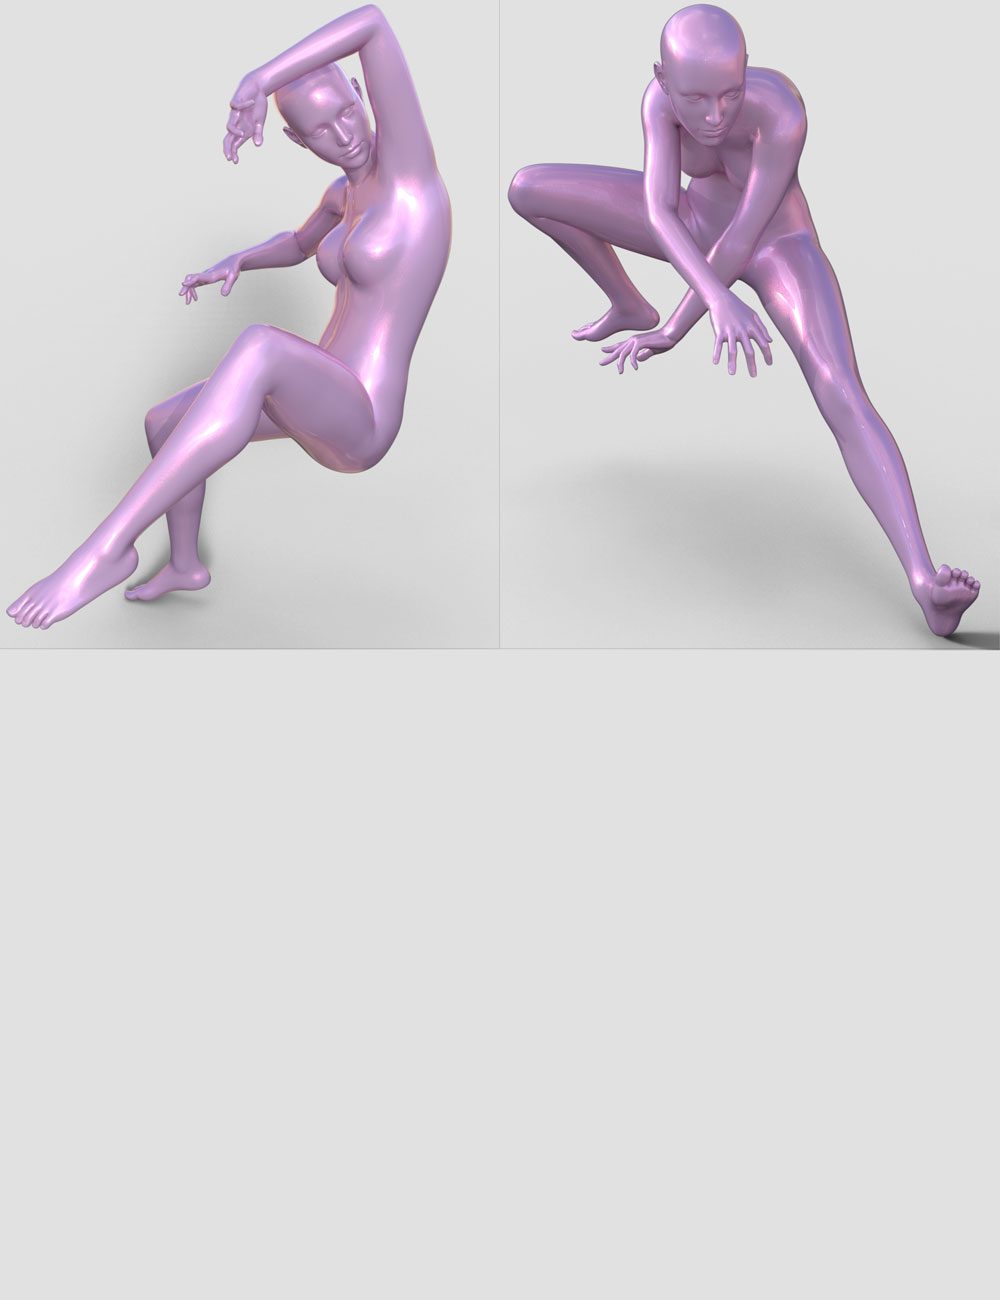 Elegant Fighting Poses for Genesis 8 Female by: Gravity Studios, 3D Models by Daz 3D